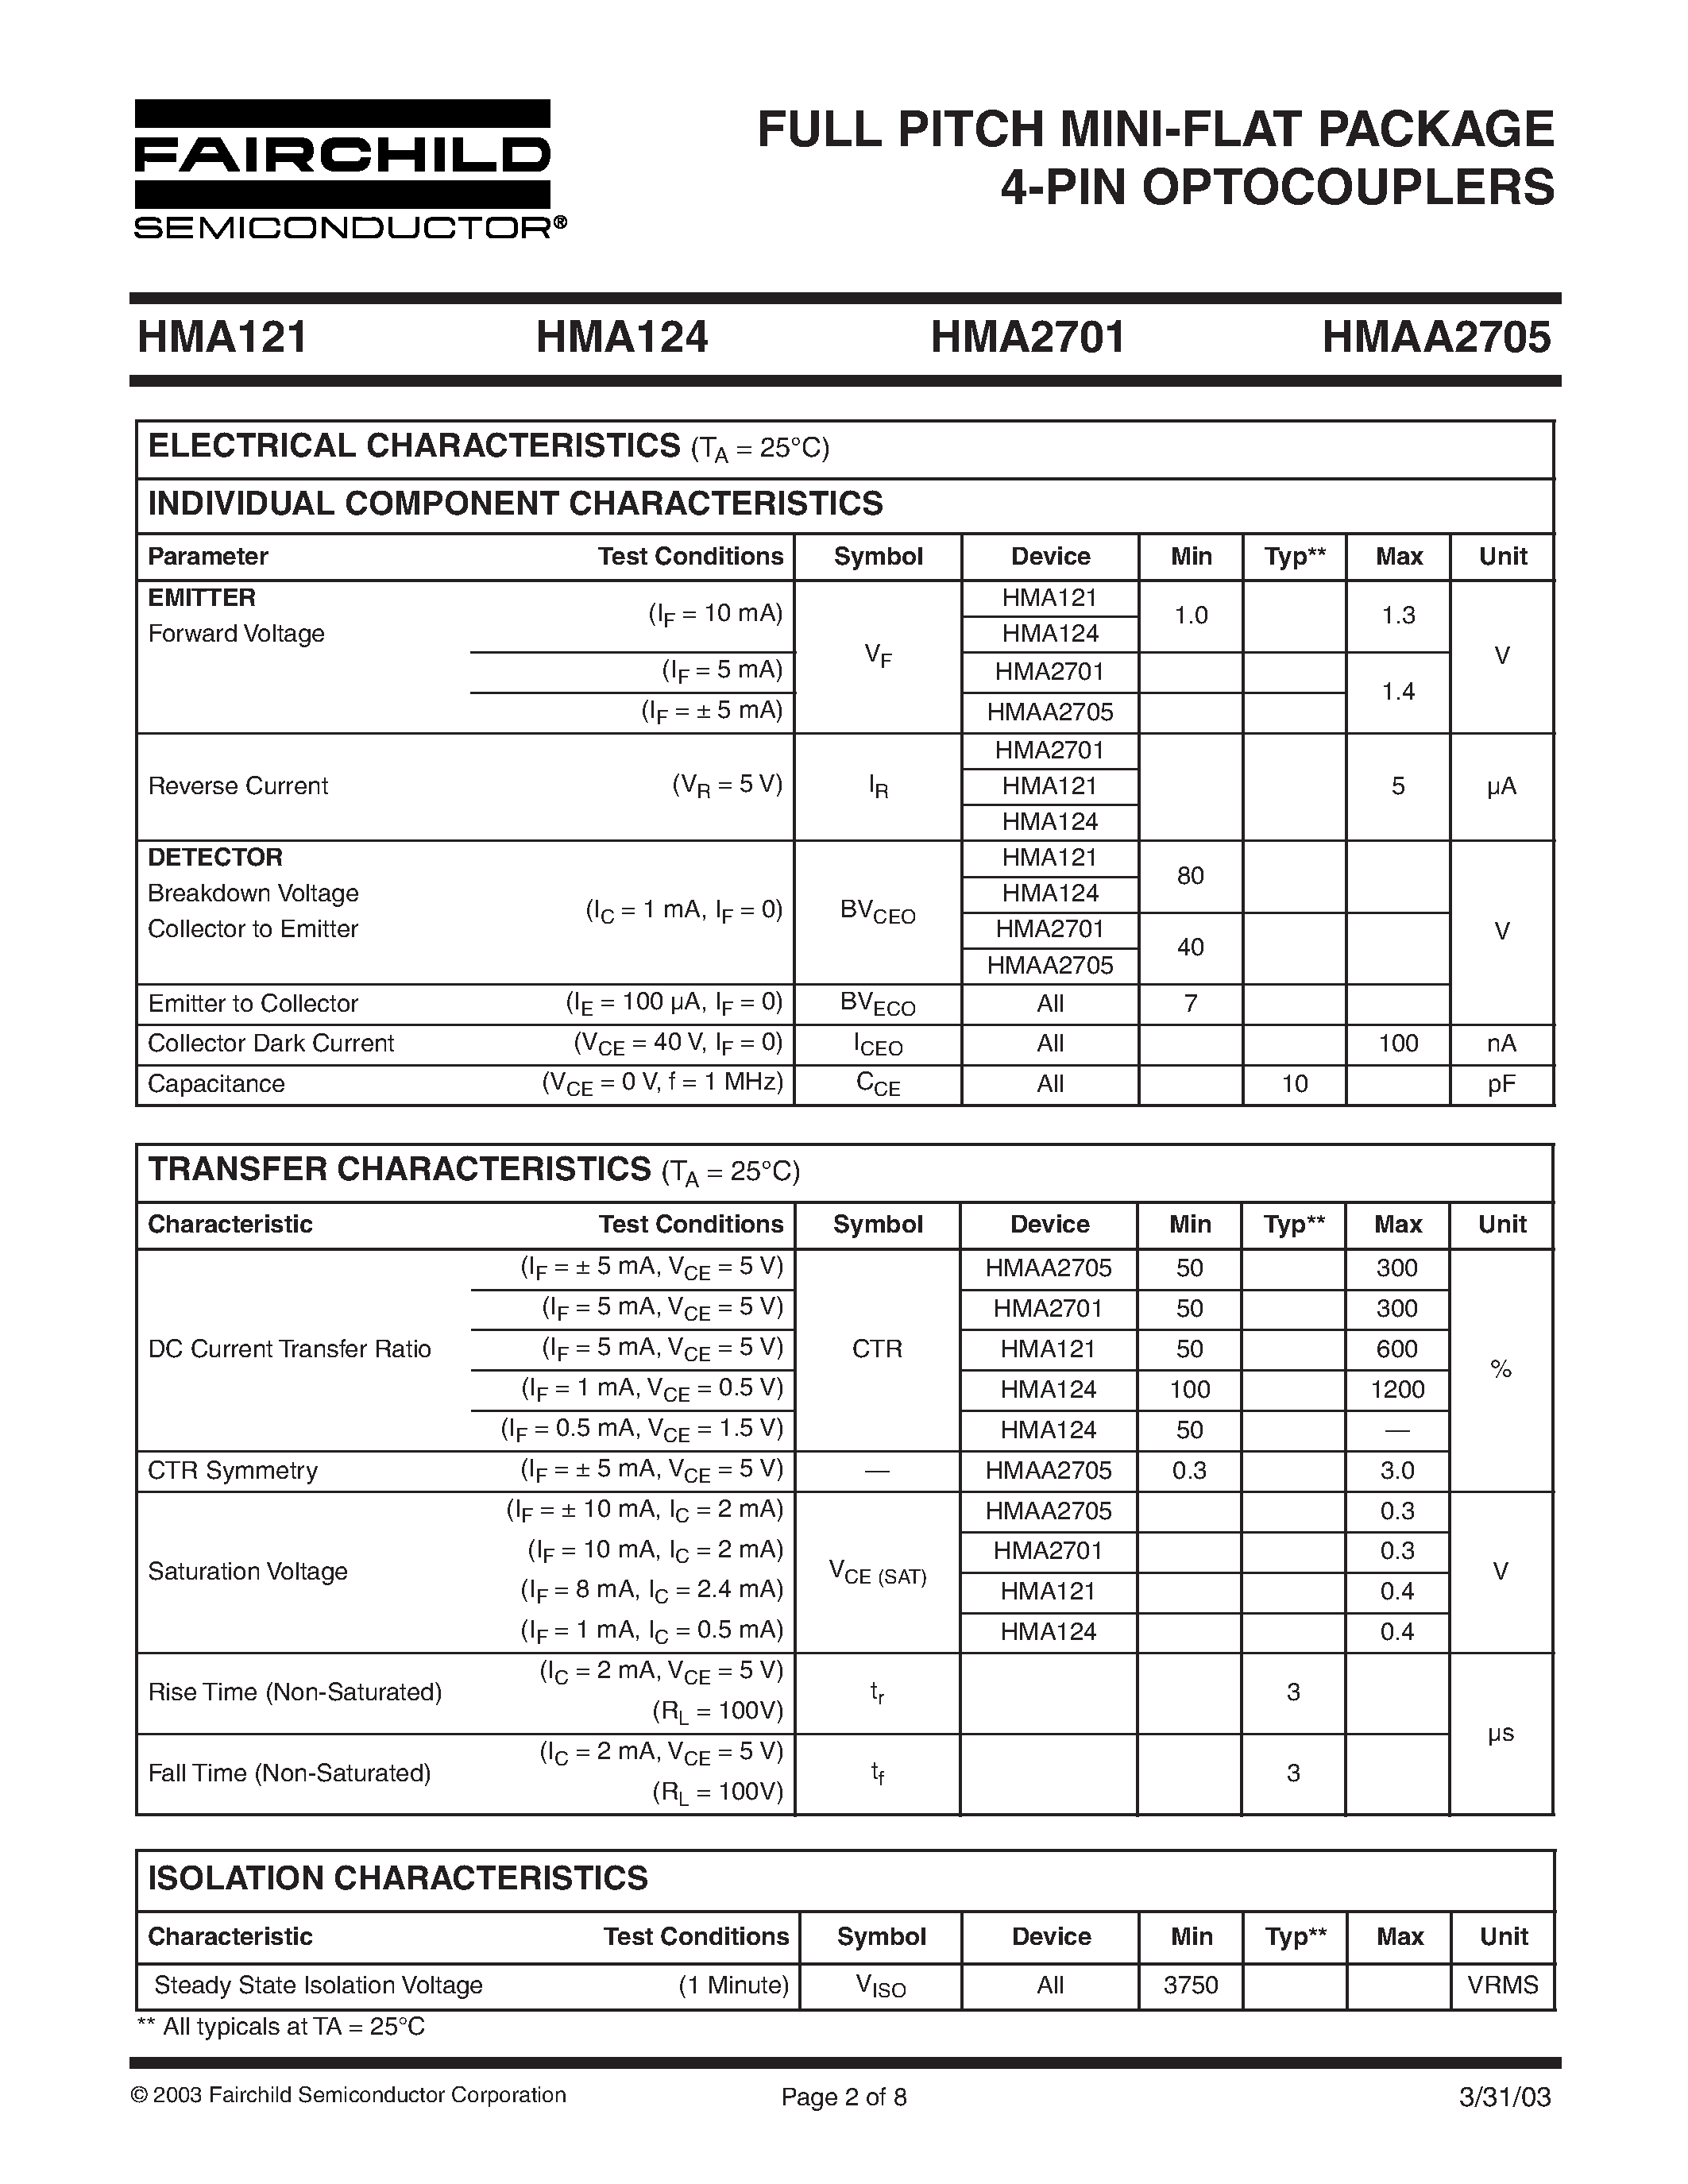 Datasheet HMAA2705 - FULL PITCH MINI-FLAT PACKAGE 4-PIN OPTOCOUPLERS page 2